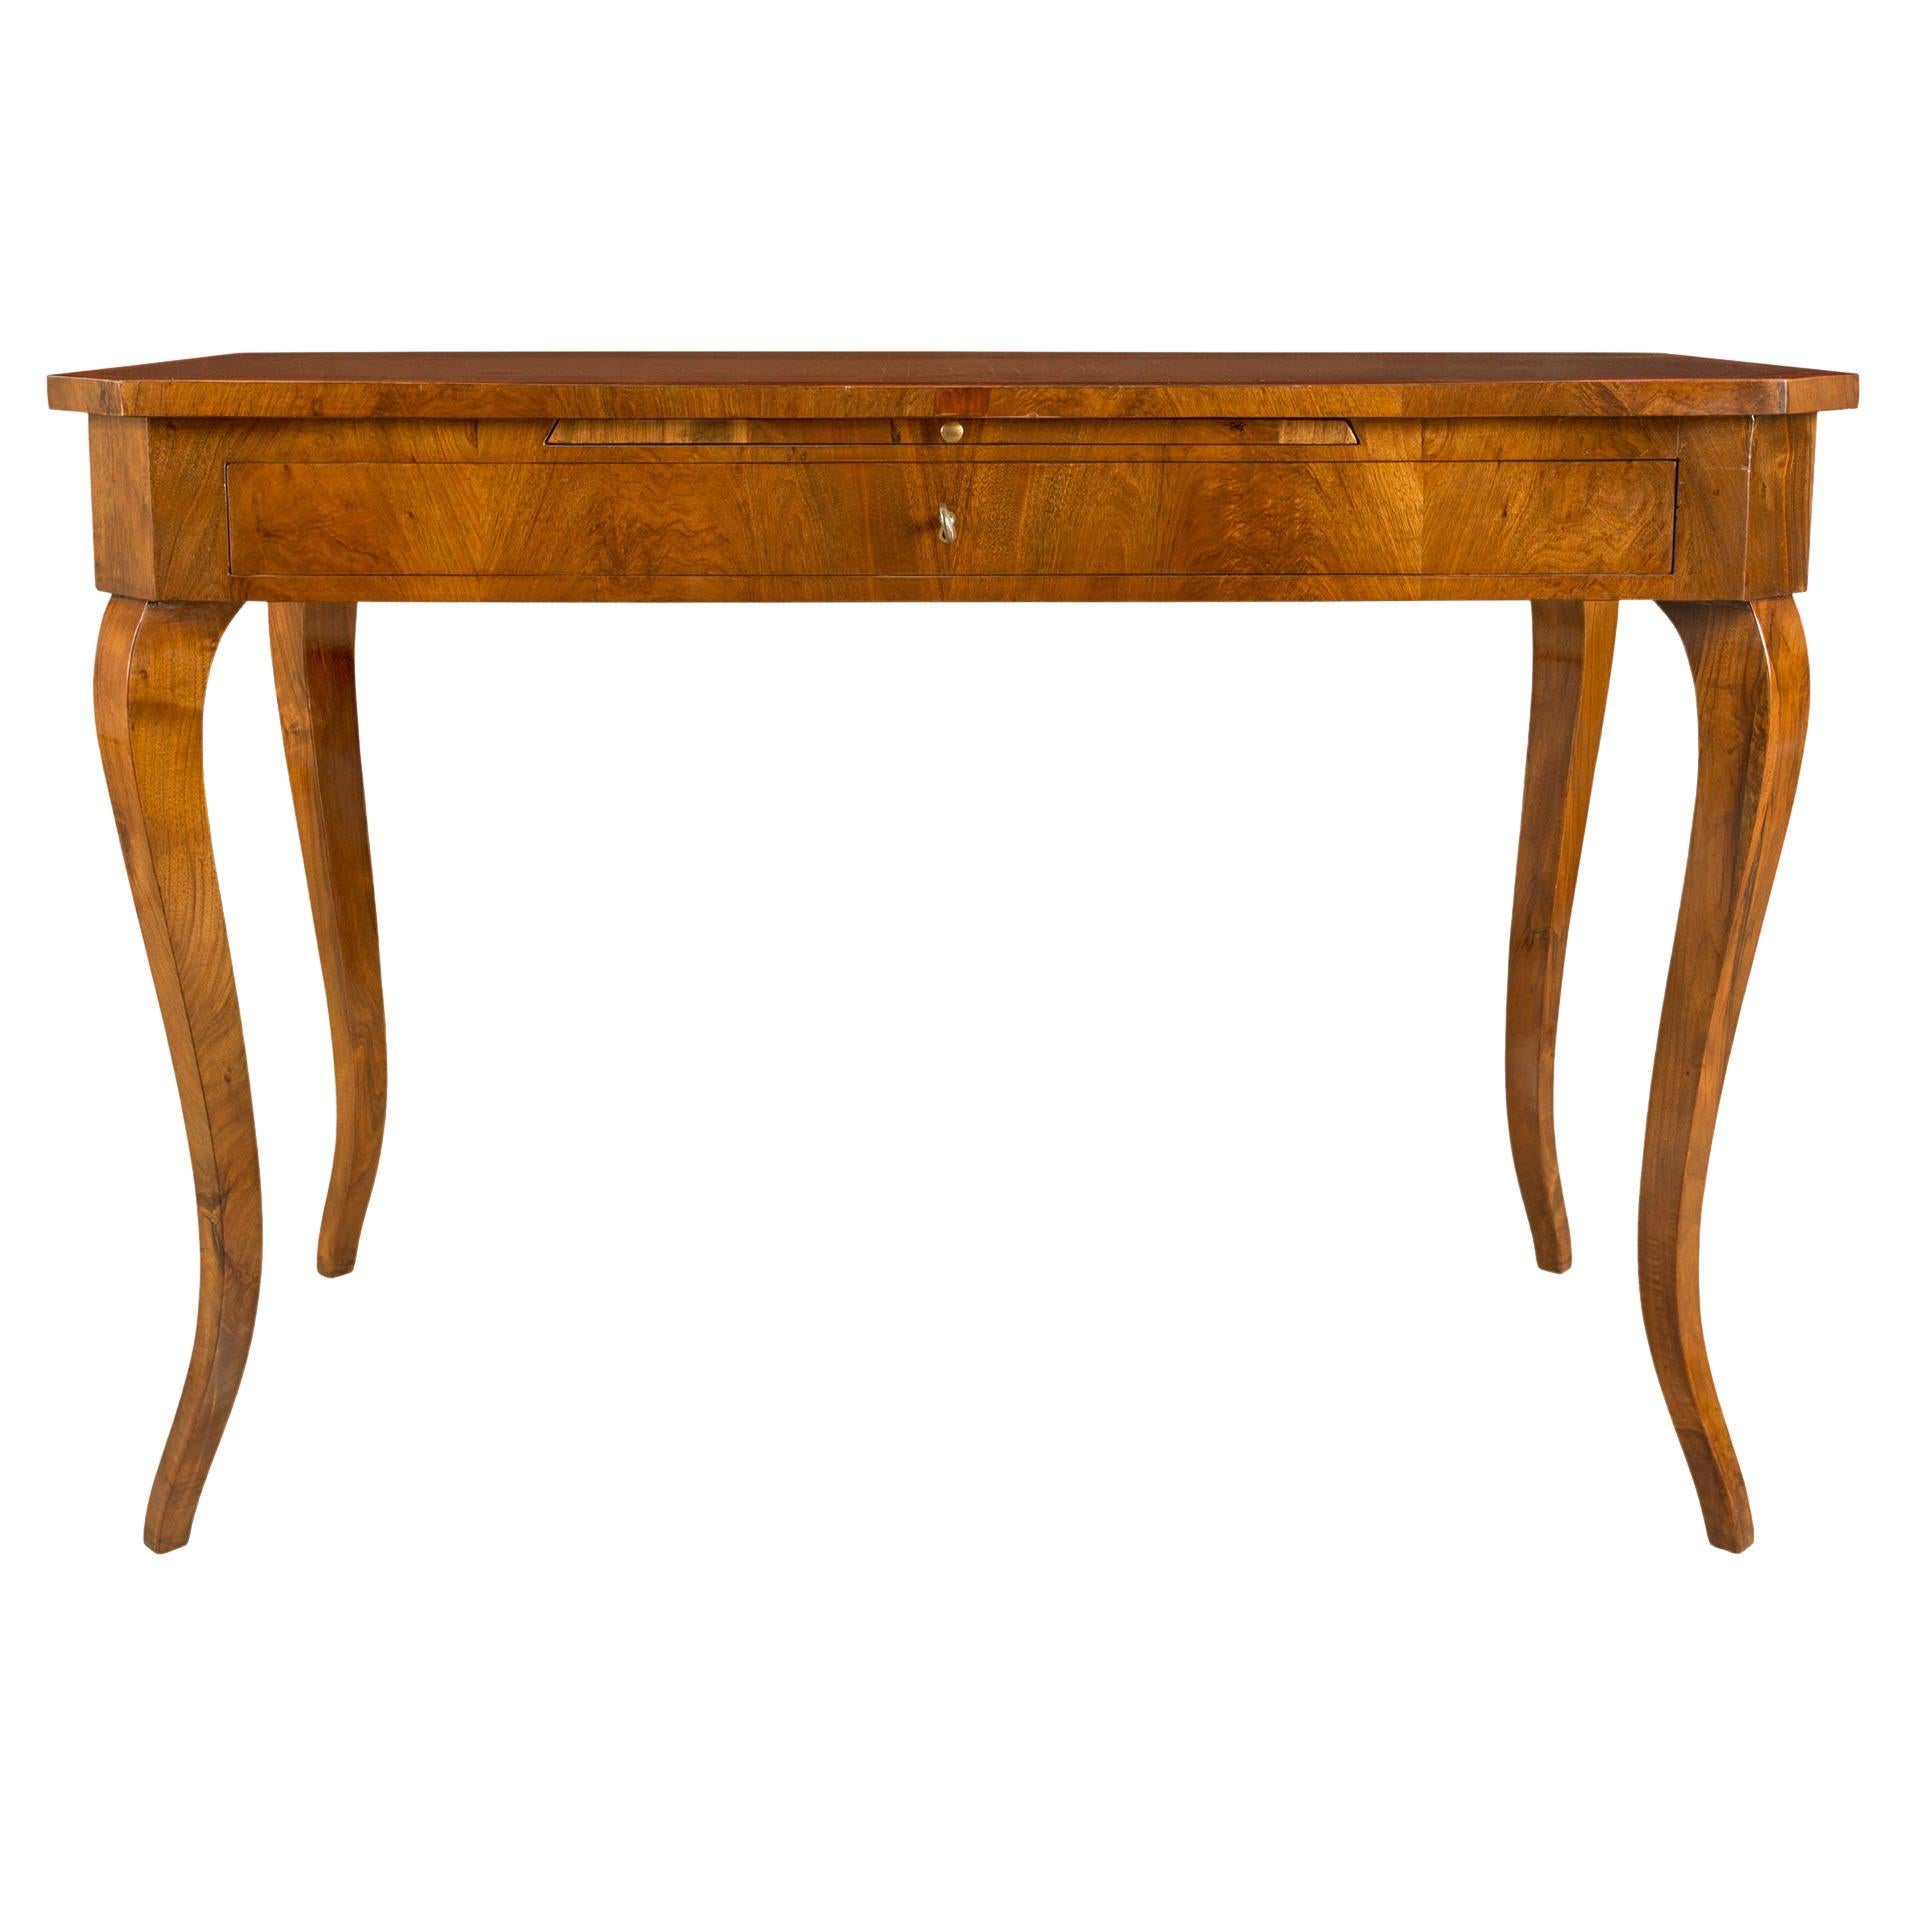 Italian 18th Century Louis XV Period Walnut, Rosewood and Bone Desk For Sale